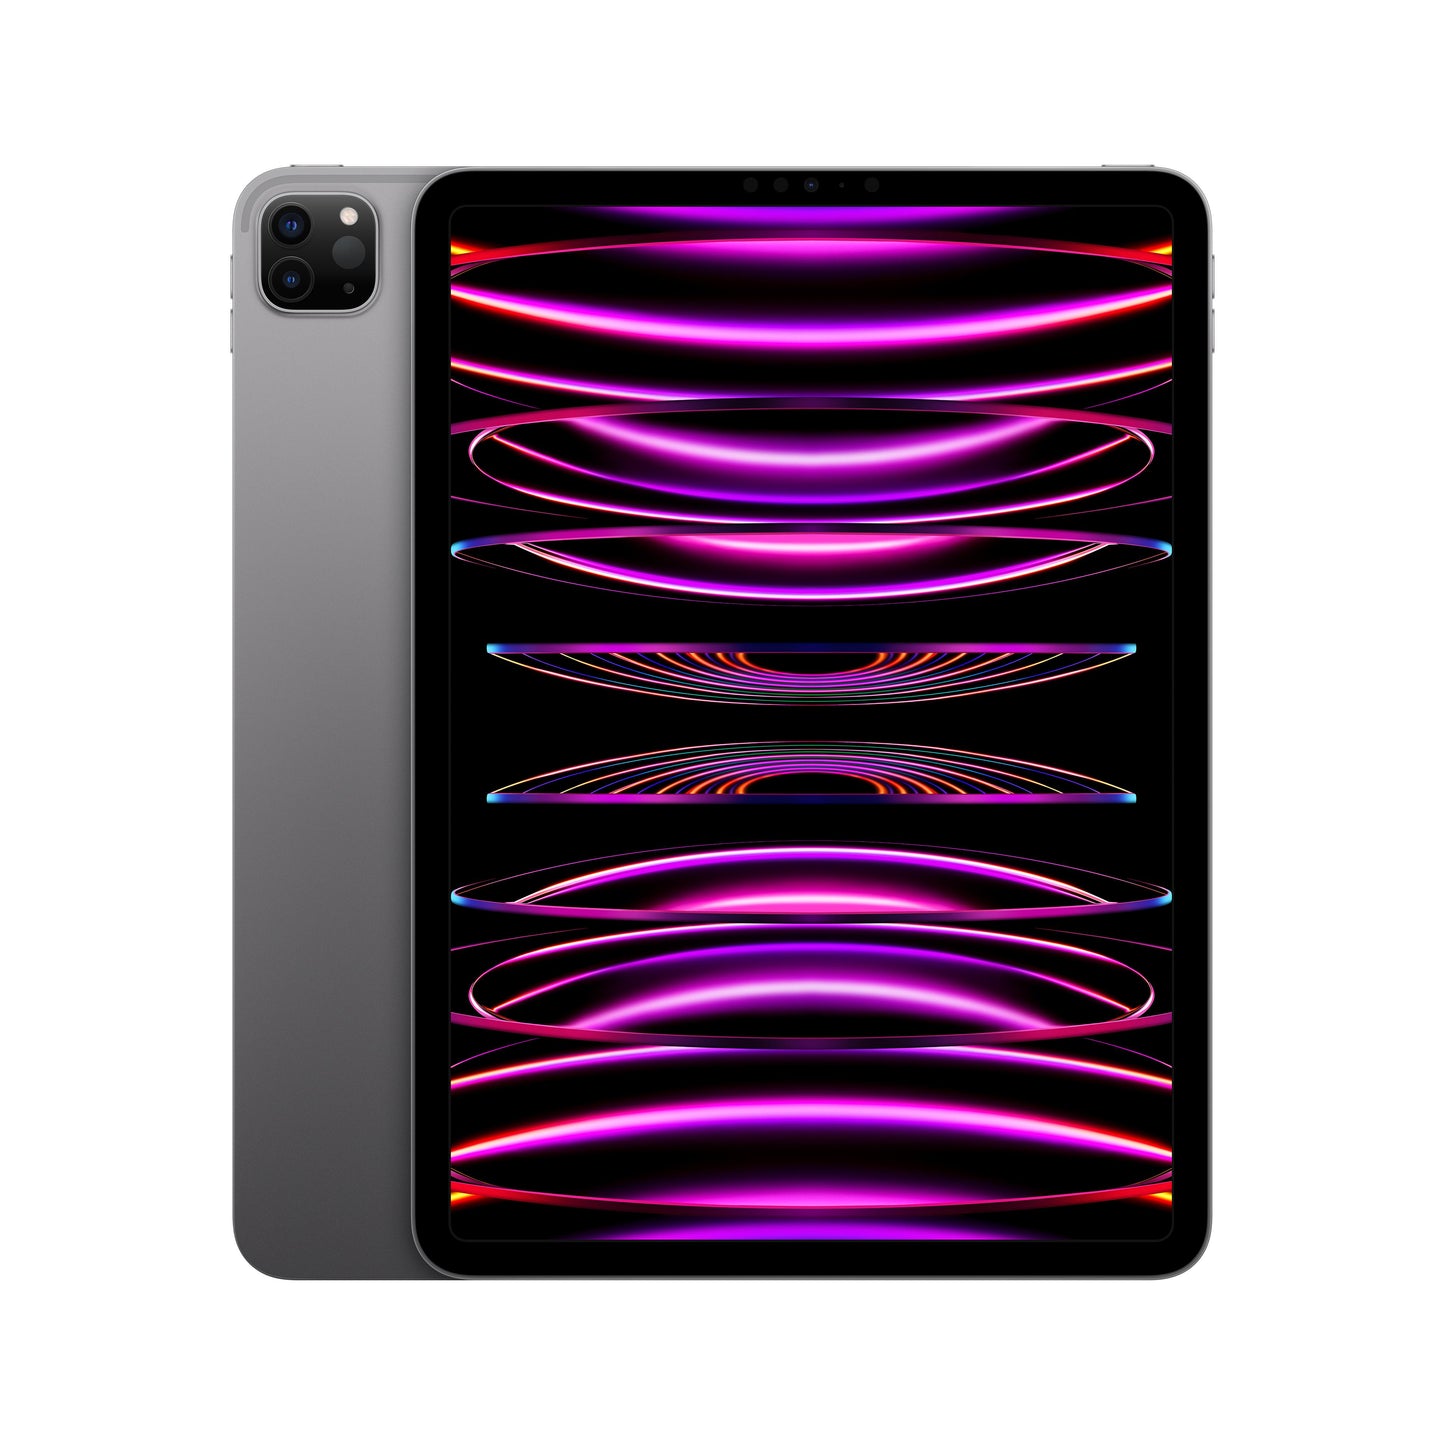 2022 11-inch iPad Pro Wi-Fi 512GB - Space Grey (4th generation)